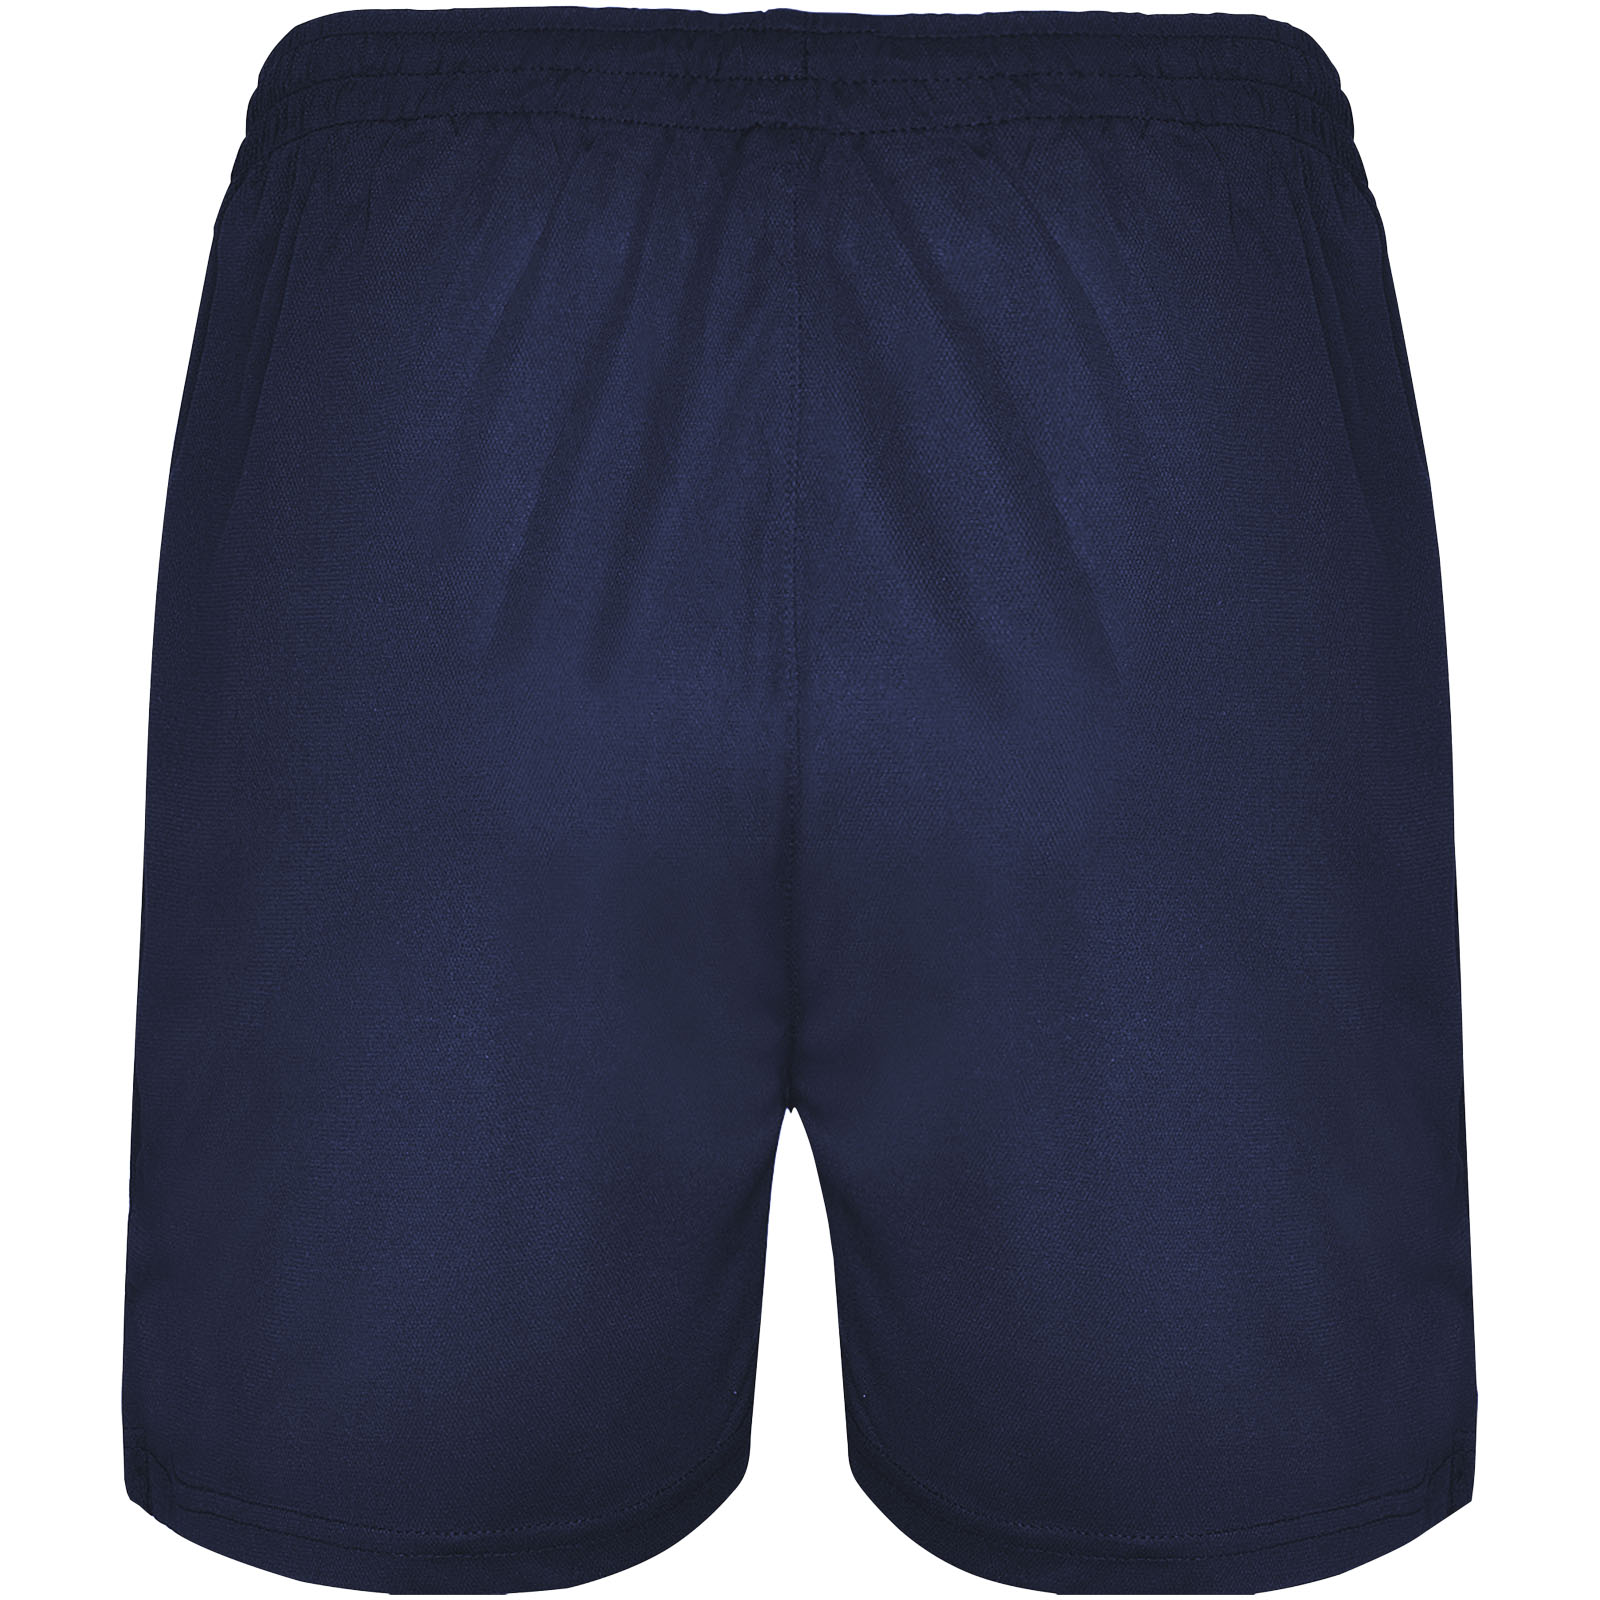 Advertising Shorts - Player unisex sports shorts - 1